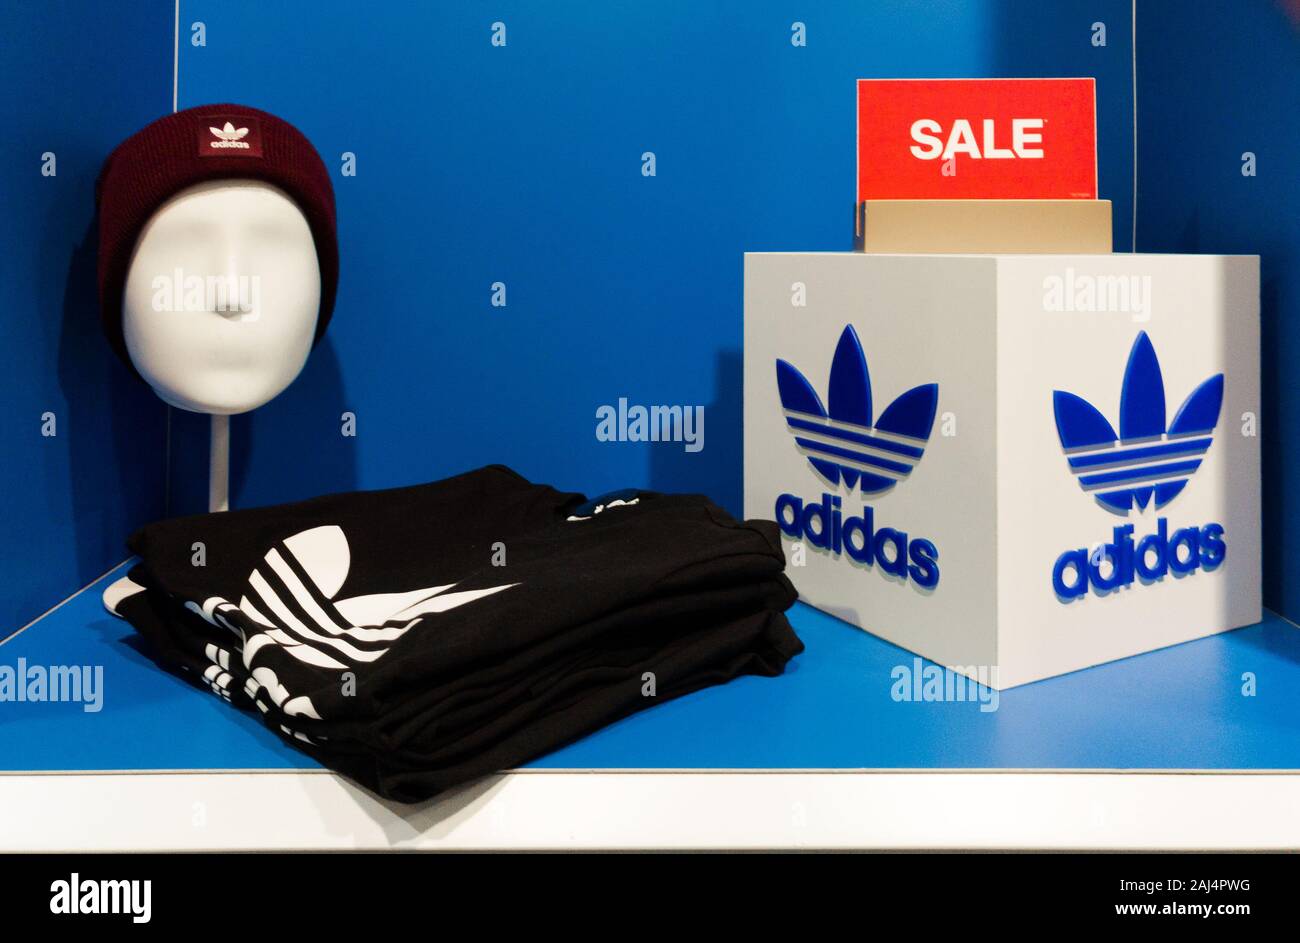 Adidas Store Design Stockfoto